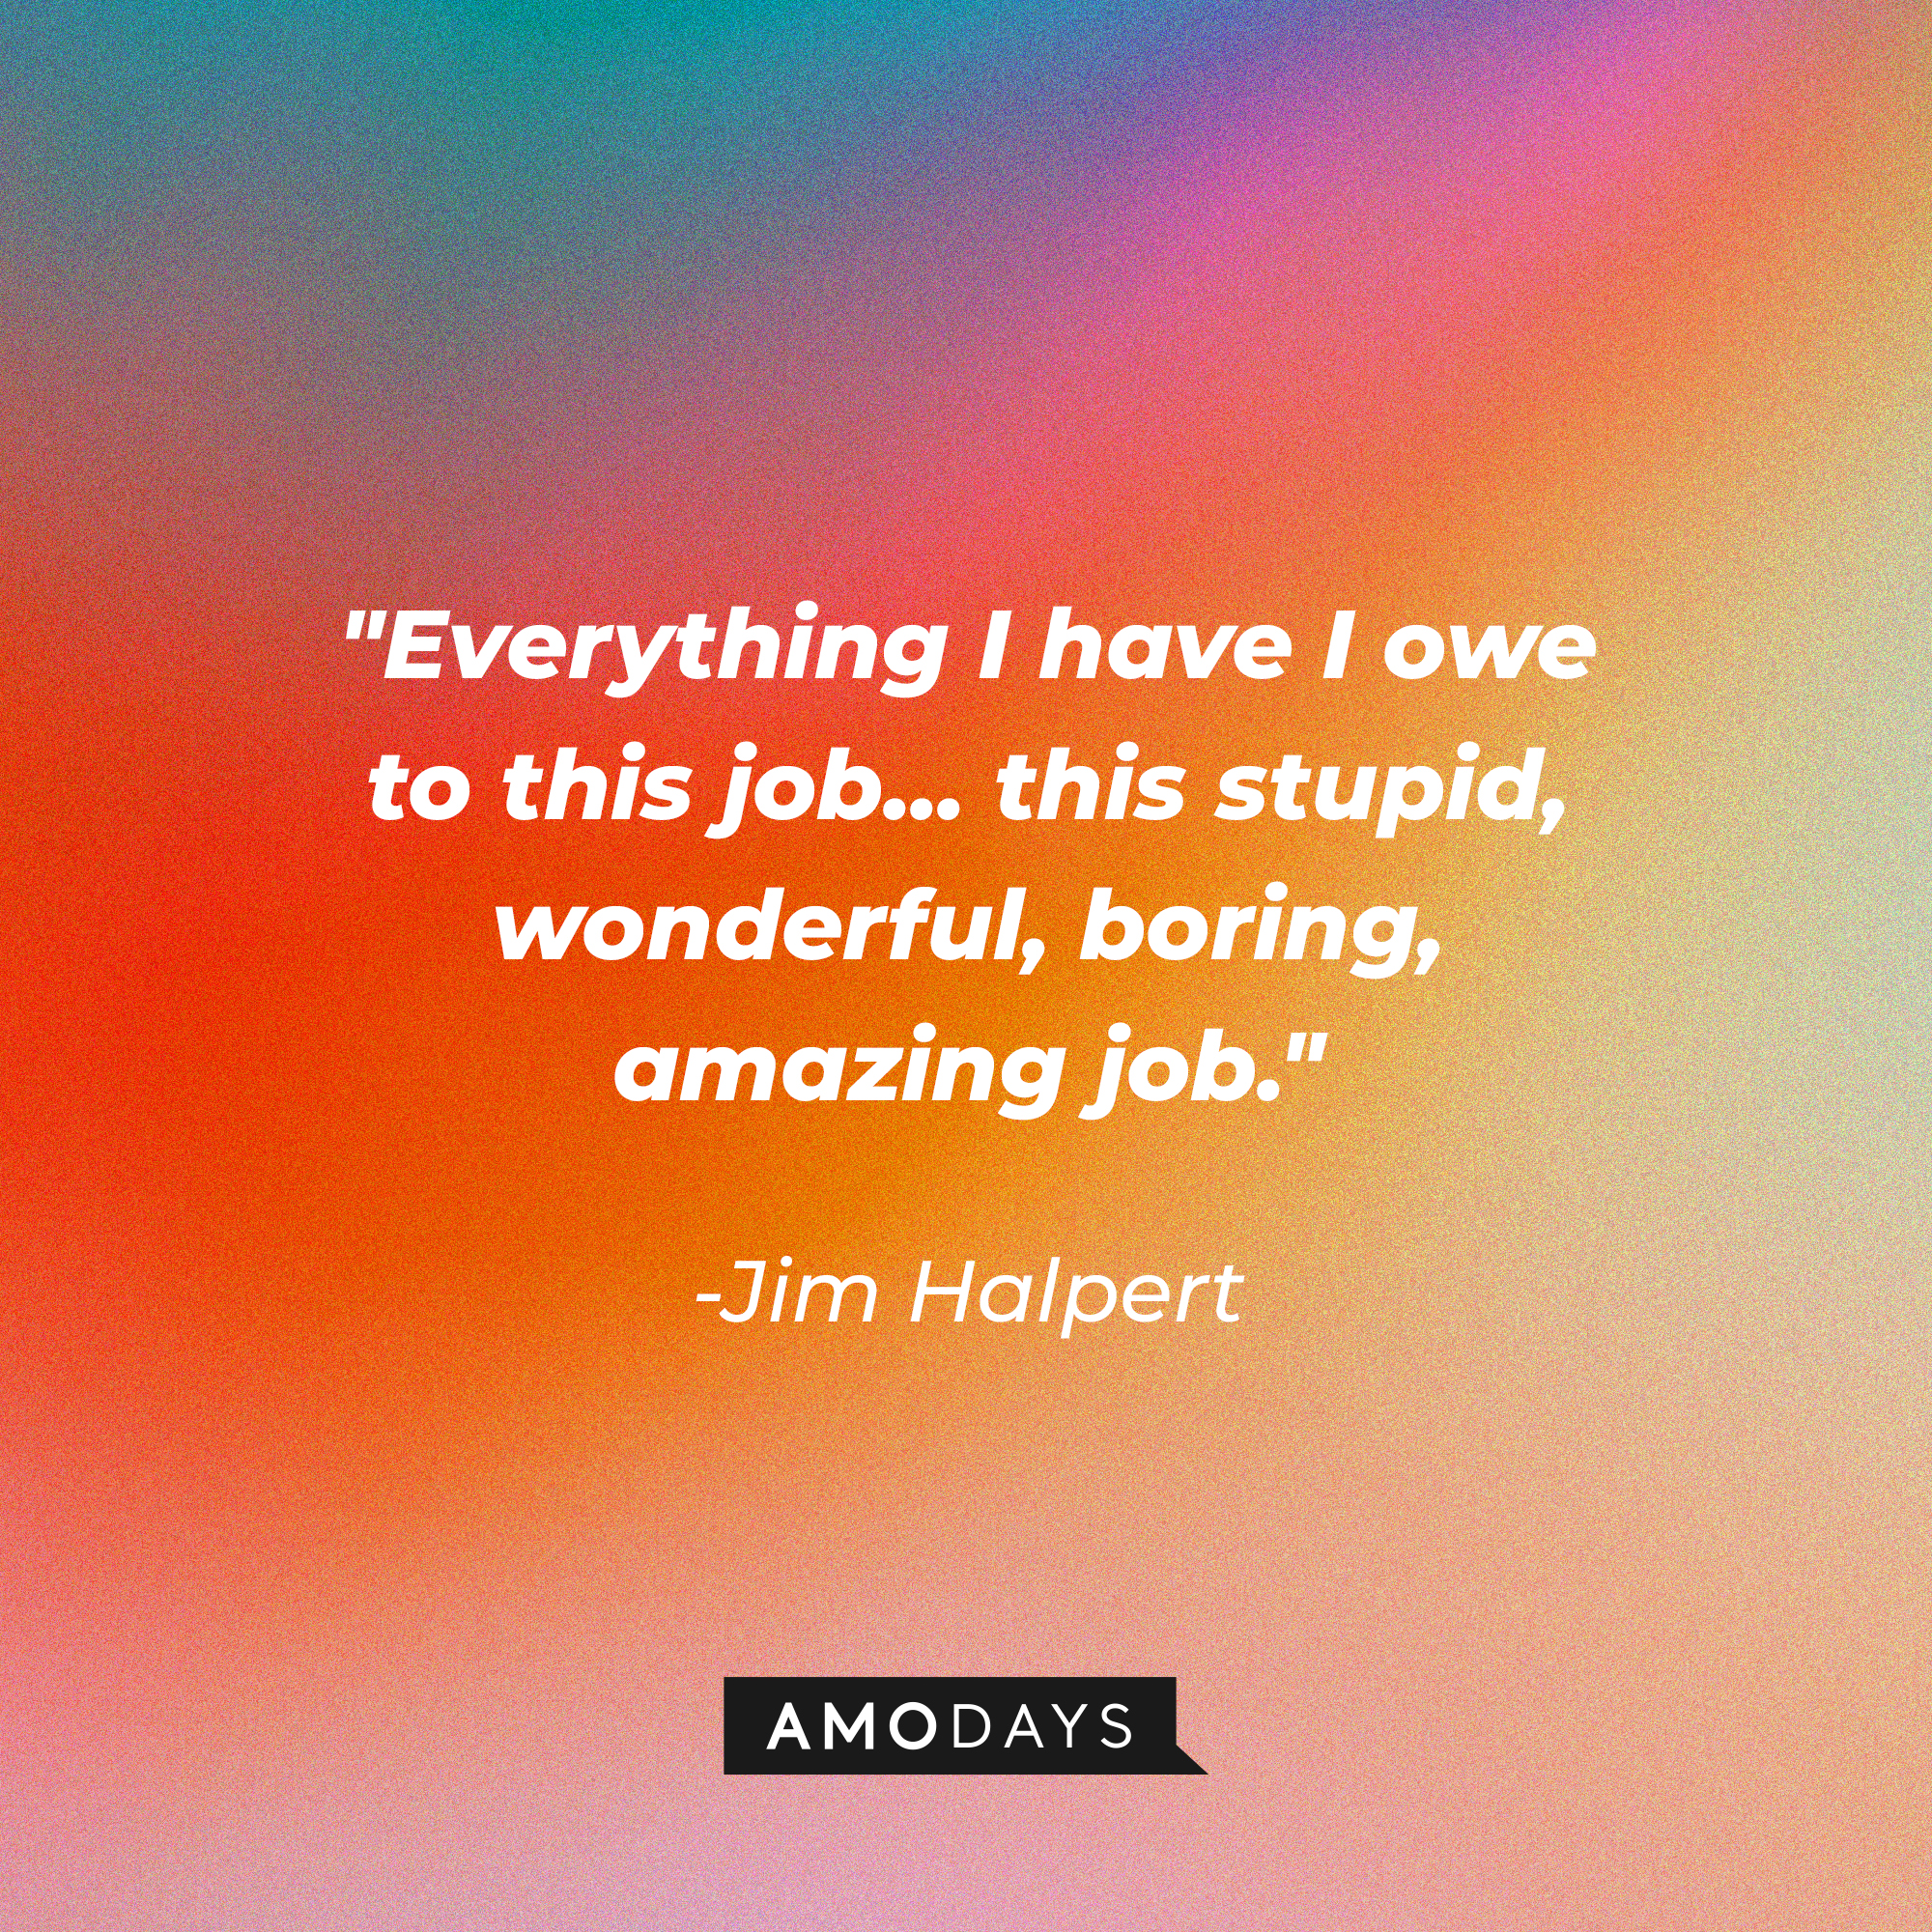 Jim Halpert’s quote: "Everything I have I owe to this job ... this stupid, wonderful, boring, amazing job." | Image: AmoDays